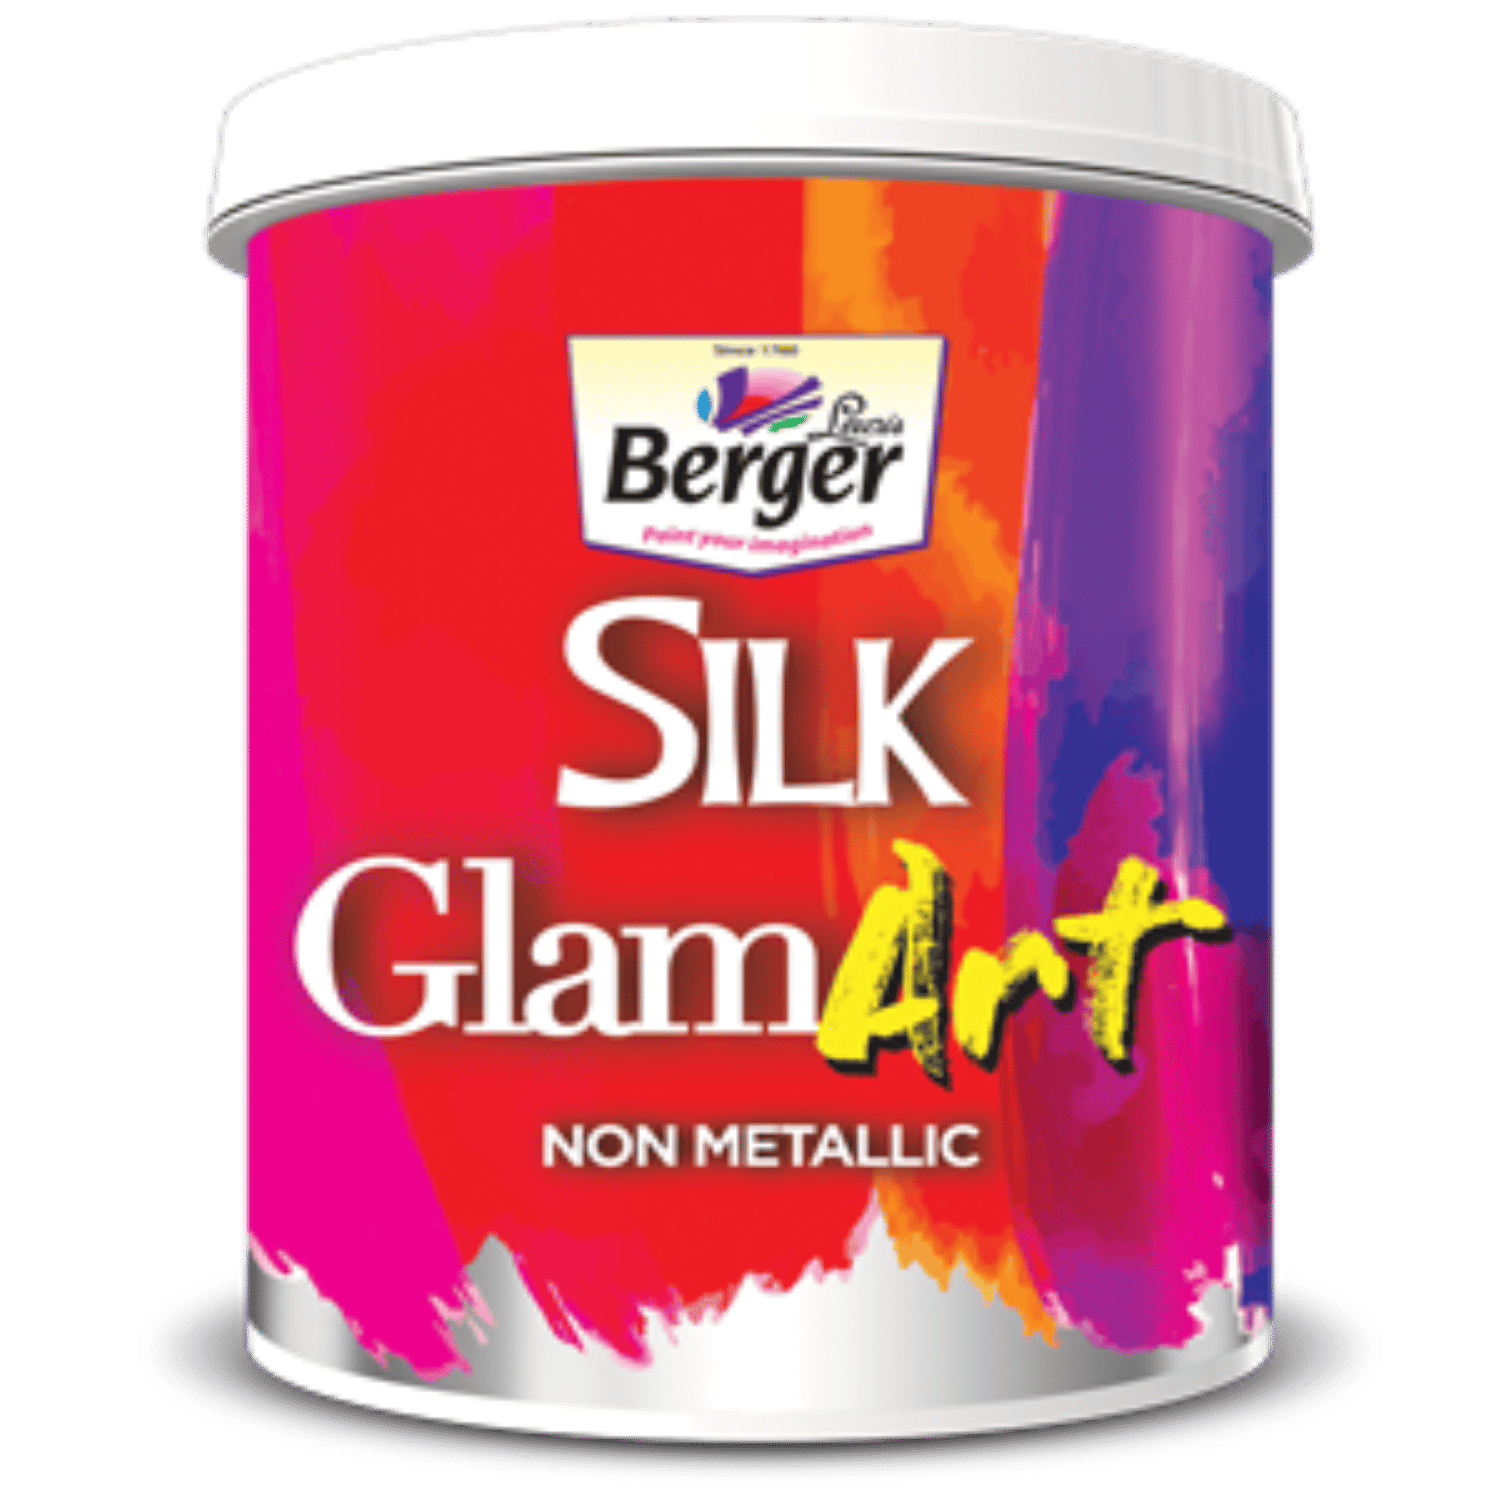 Luxury Silk Metallic Finish - Berger Paints Bangladesh